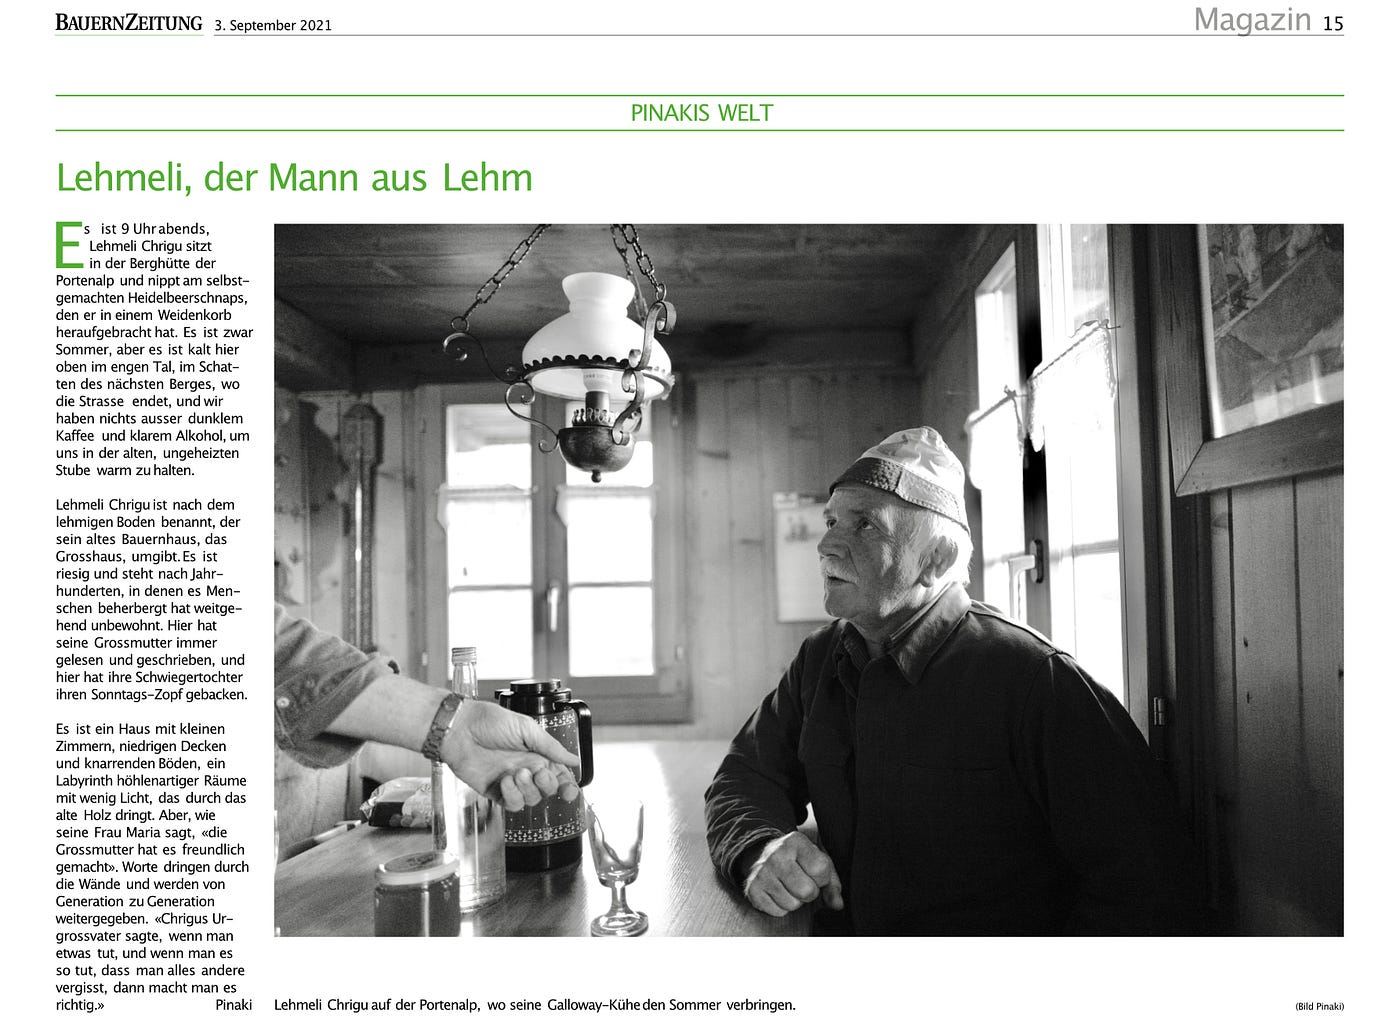 Columns Switzerland's Agricultural Newspaper | by Pinaki | Pinaki | Medium